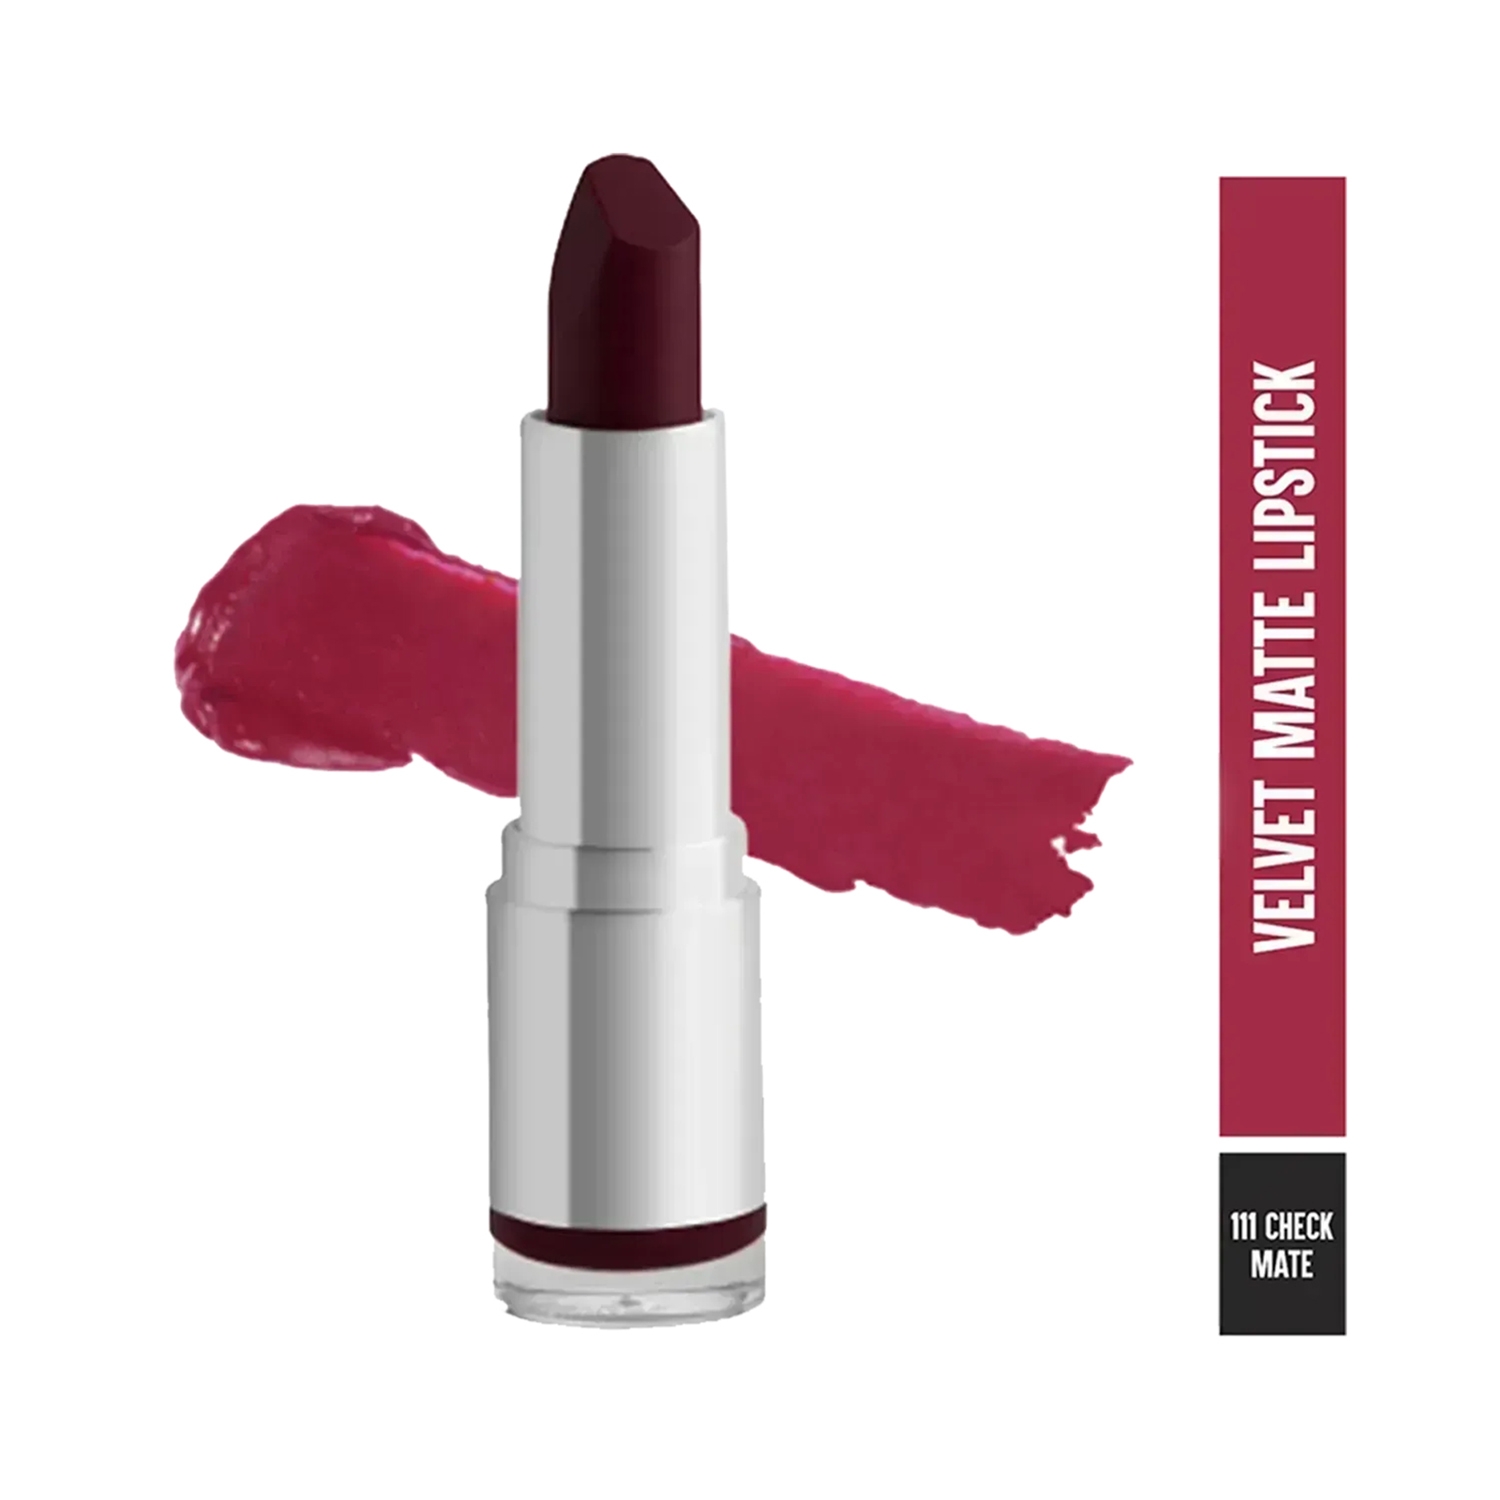 Colorbar | Colorbar Velvet Matte Lipstick - 111 Check Mate (4.2gm)